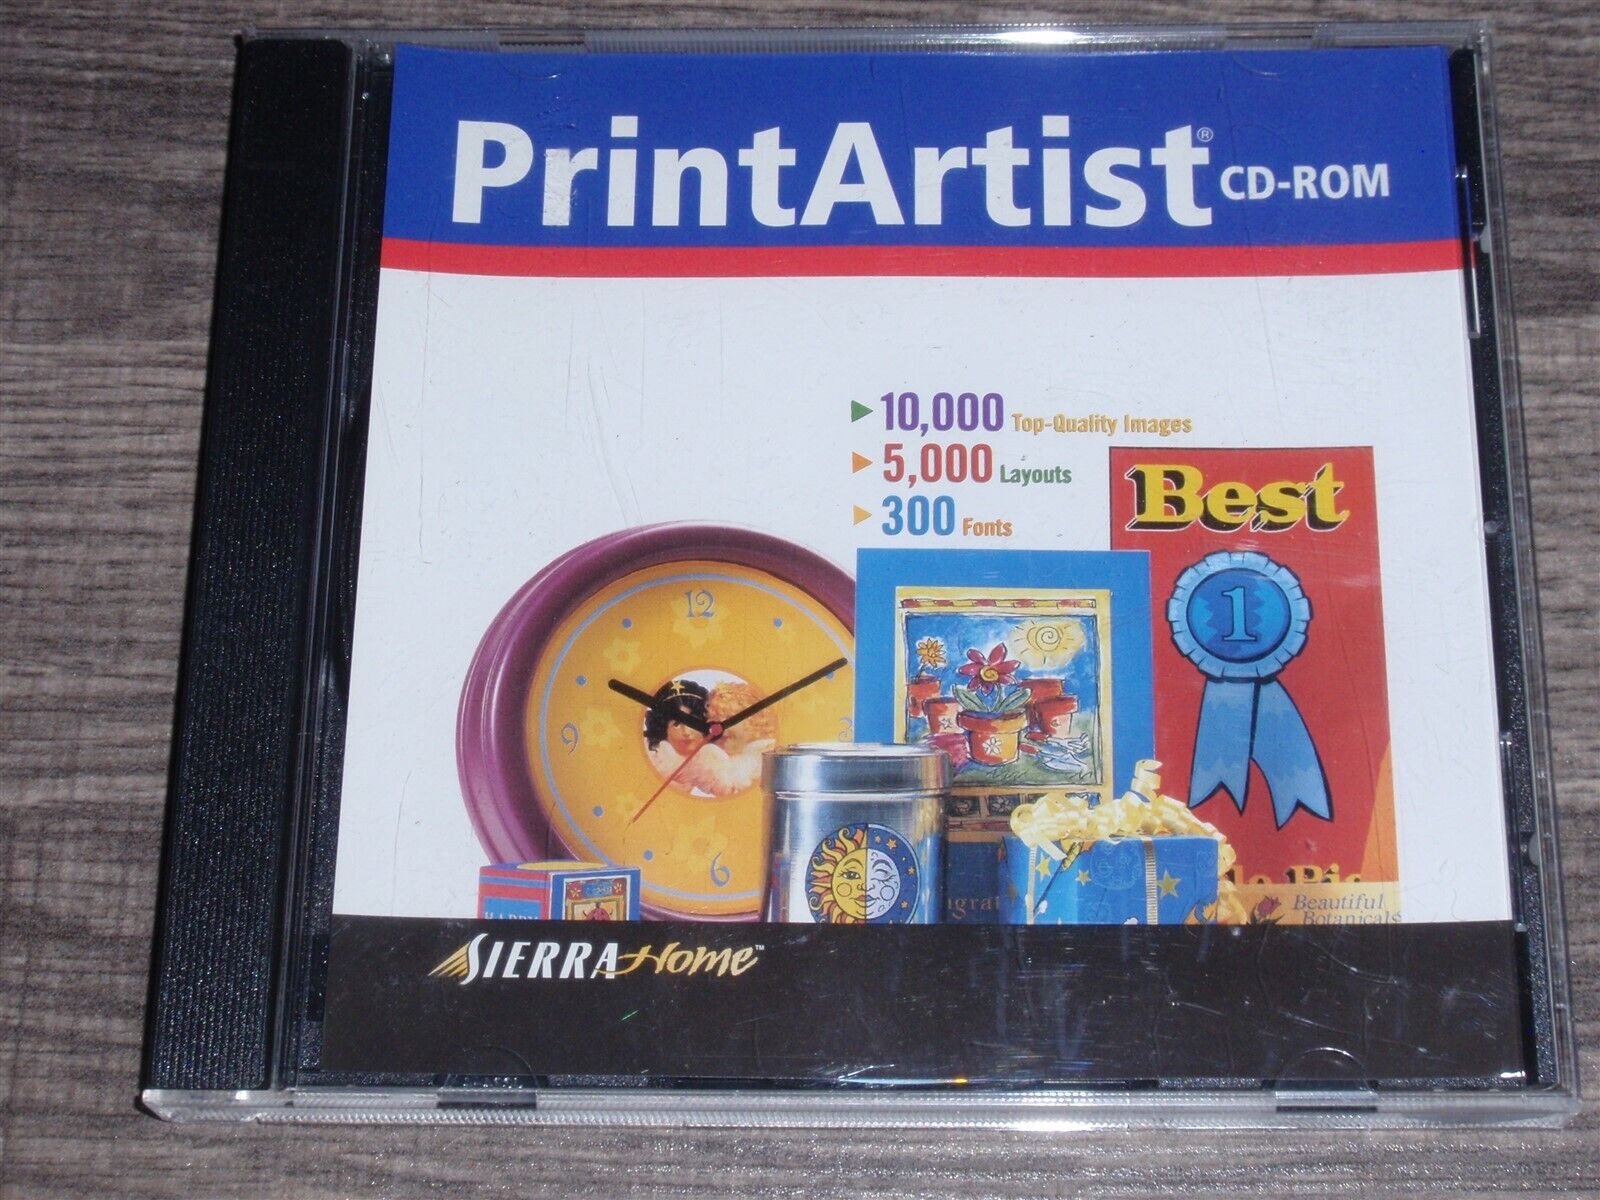 PrintArtist 2003 Version 18.0 PC CD-ROM Sierra Home for Windows XP Print Artist